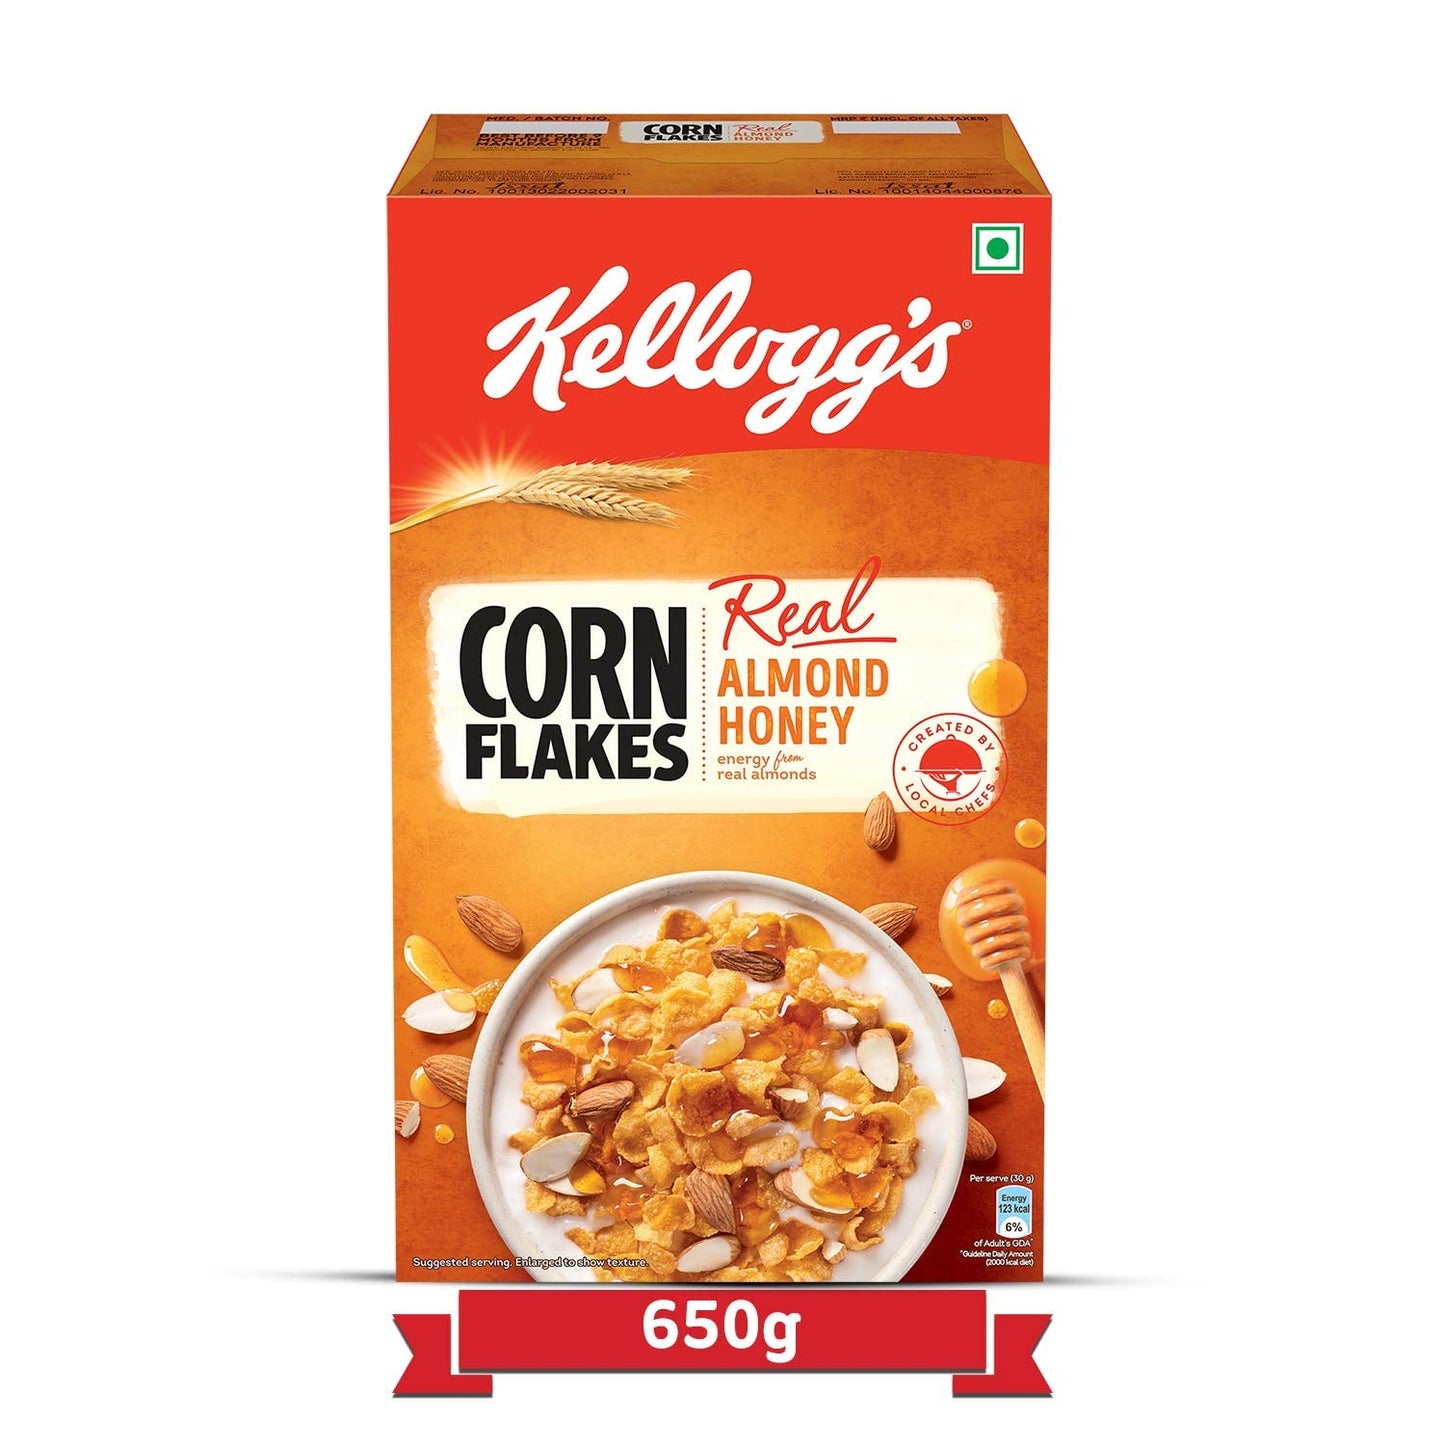 Kellogg's Corn Flakes Real Almond Honey, 650g